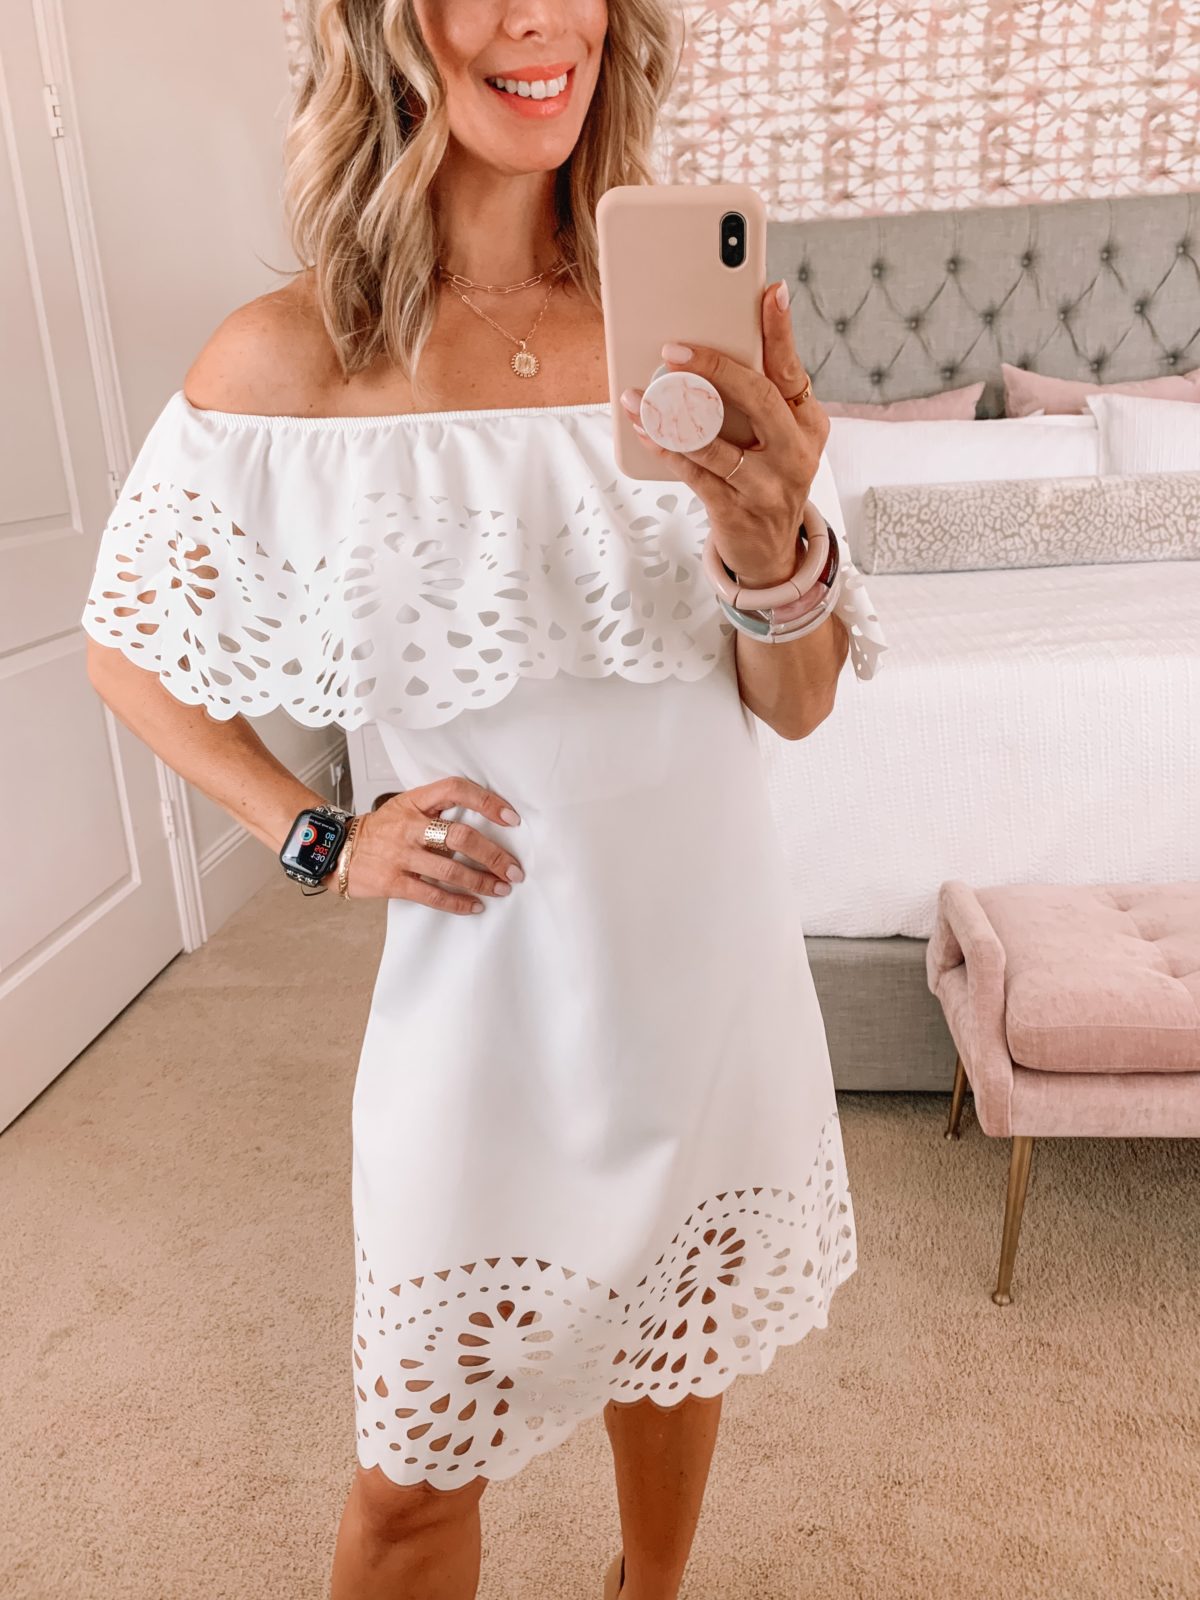 Amazon Fashion Faves, White Dress 